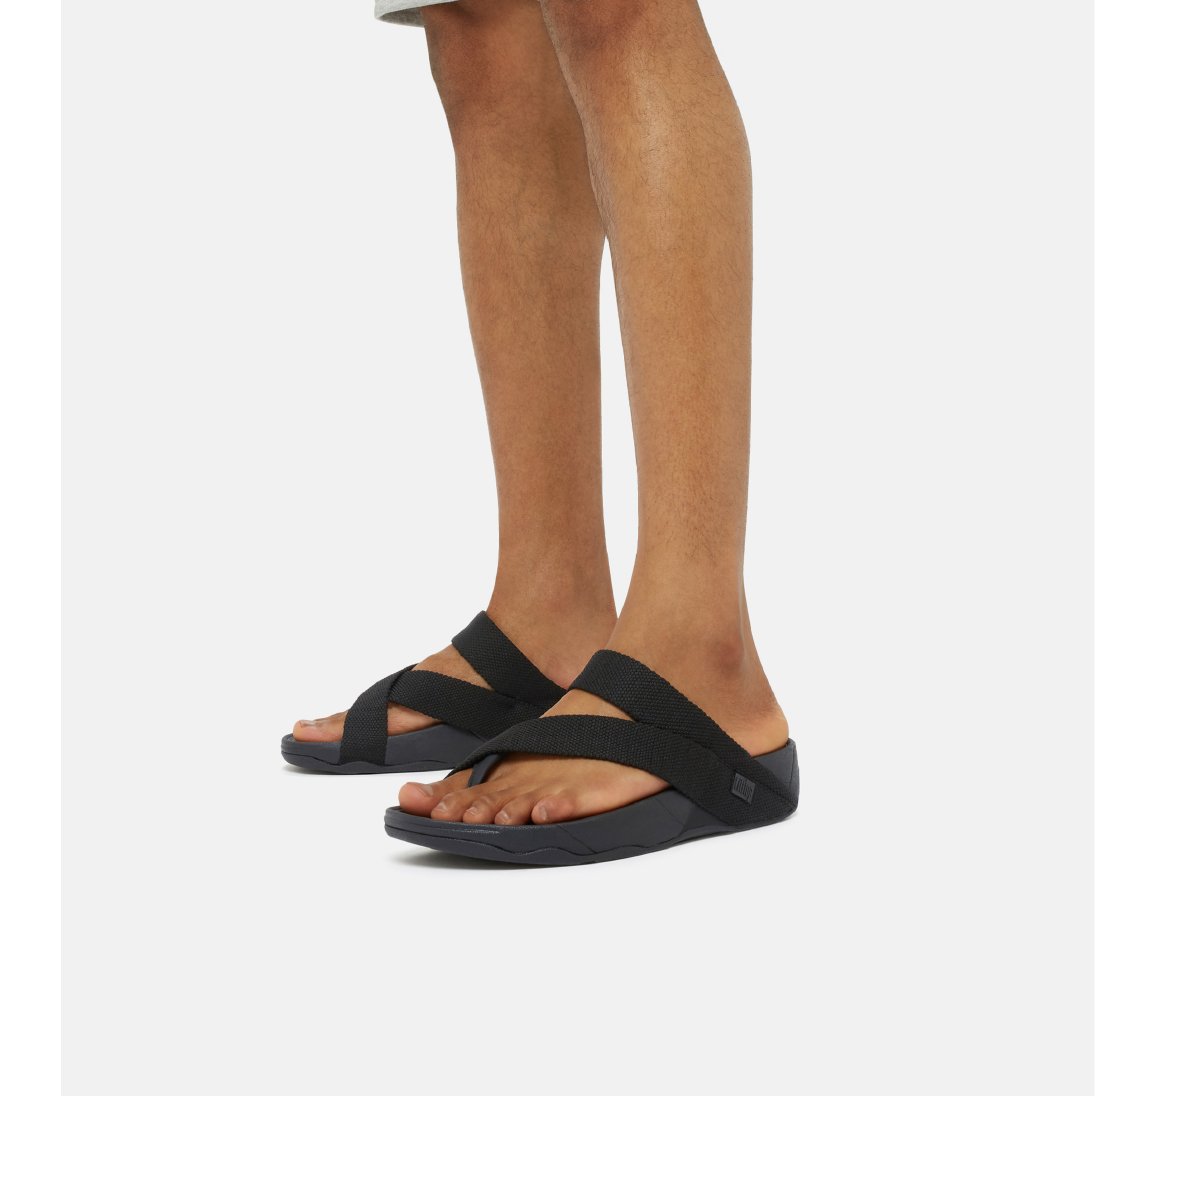 FitFlop SLING Weave Toe-Post Sandals Black style shot